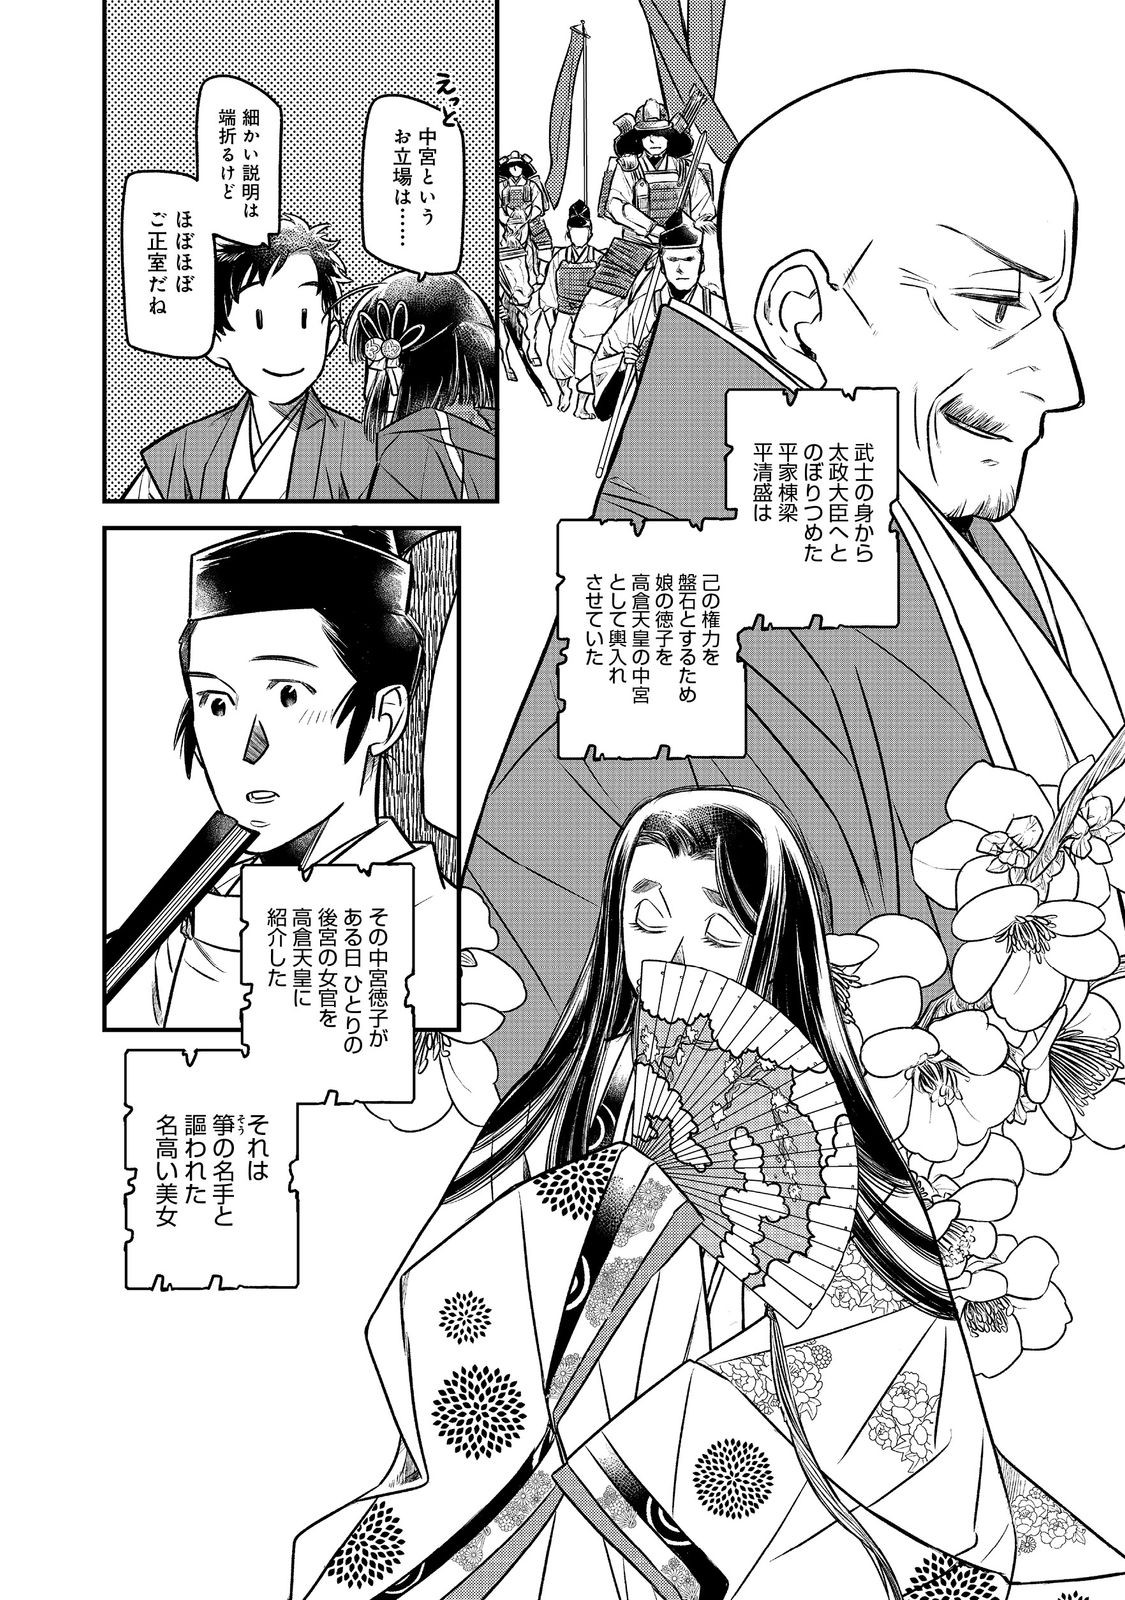 Kitanomandokoro-sama no Okeshougakari - Chapter 7.2 - Page 1